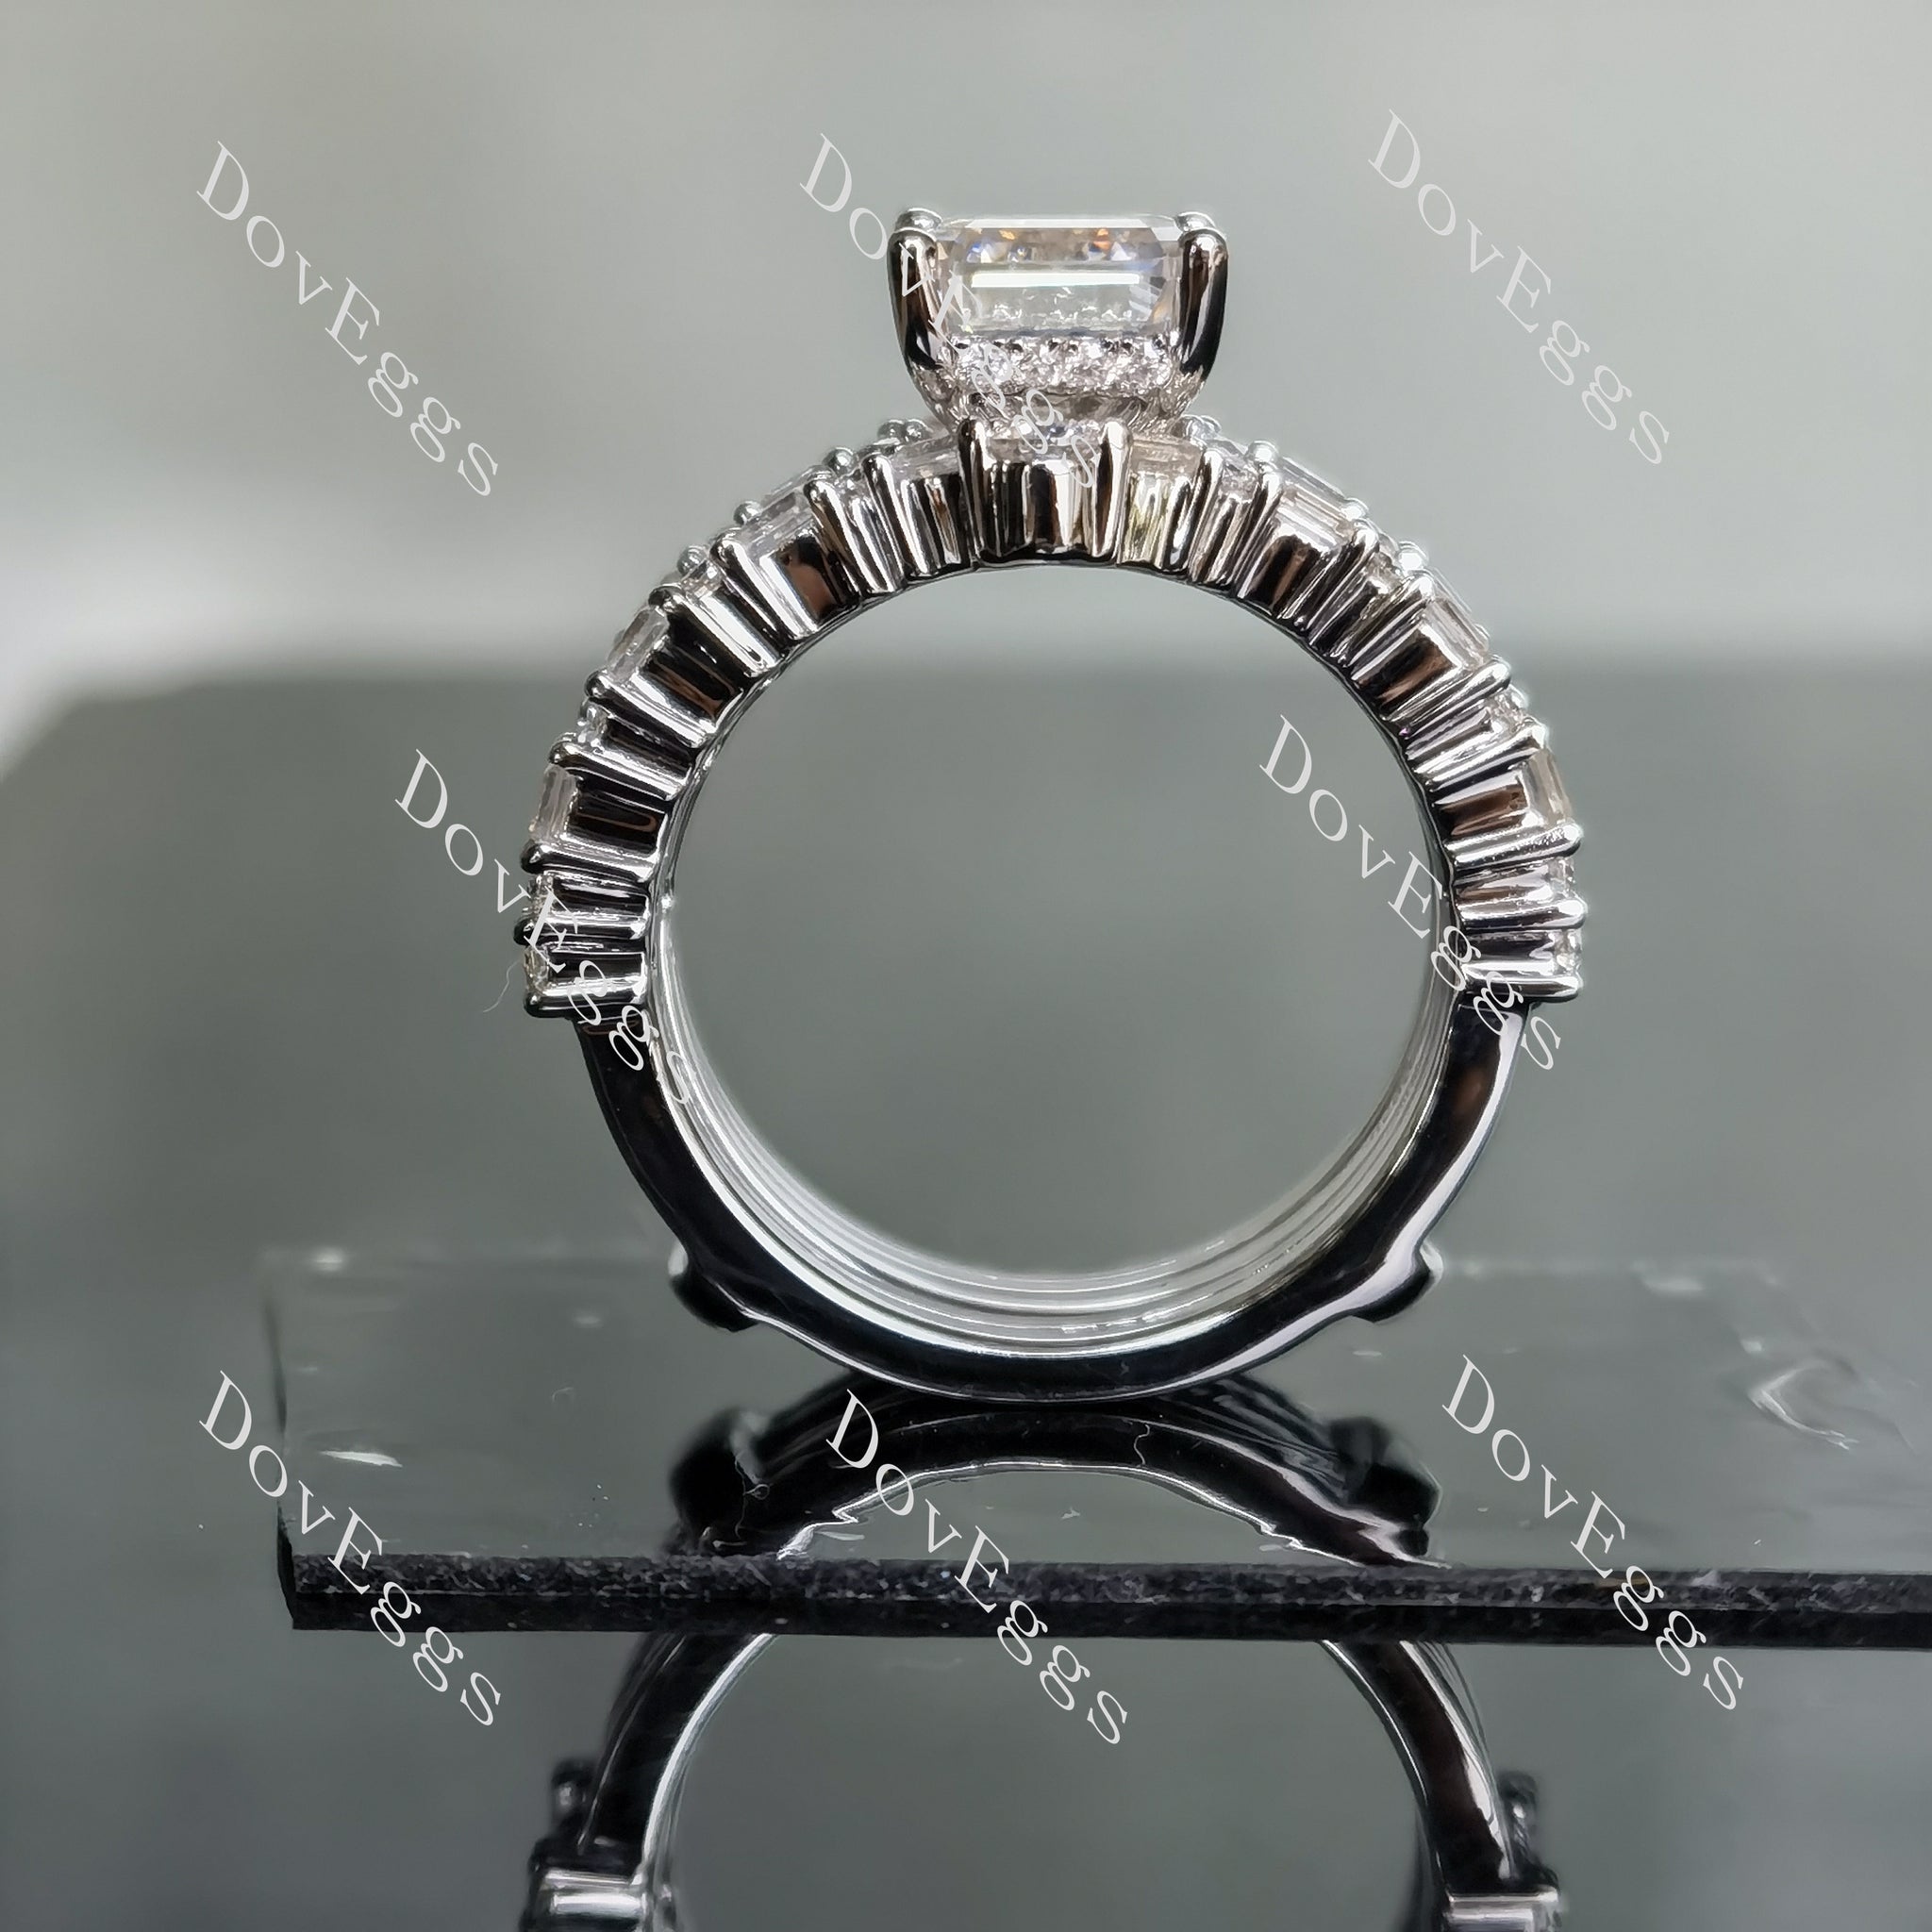 Doveggs emerald half eternity pave moissanite engagement bridal set (2 rings)